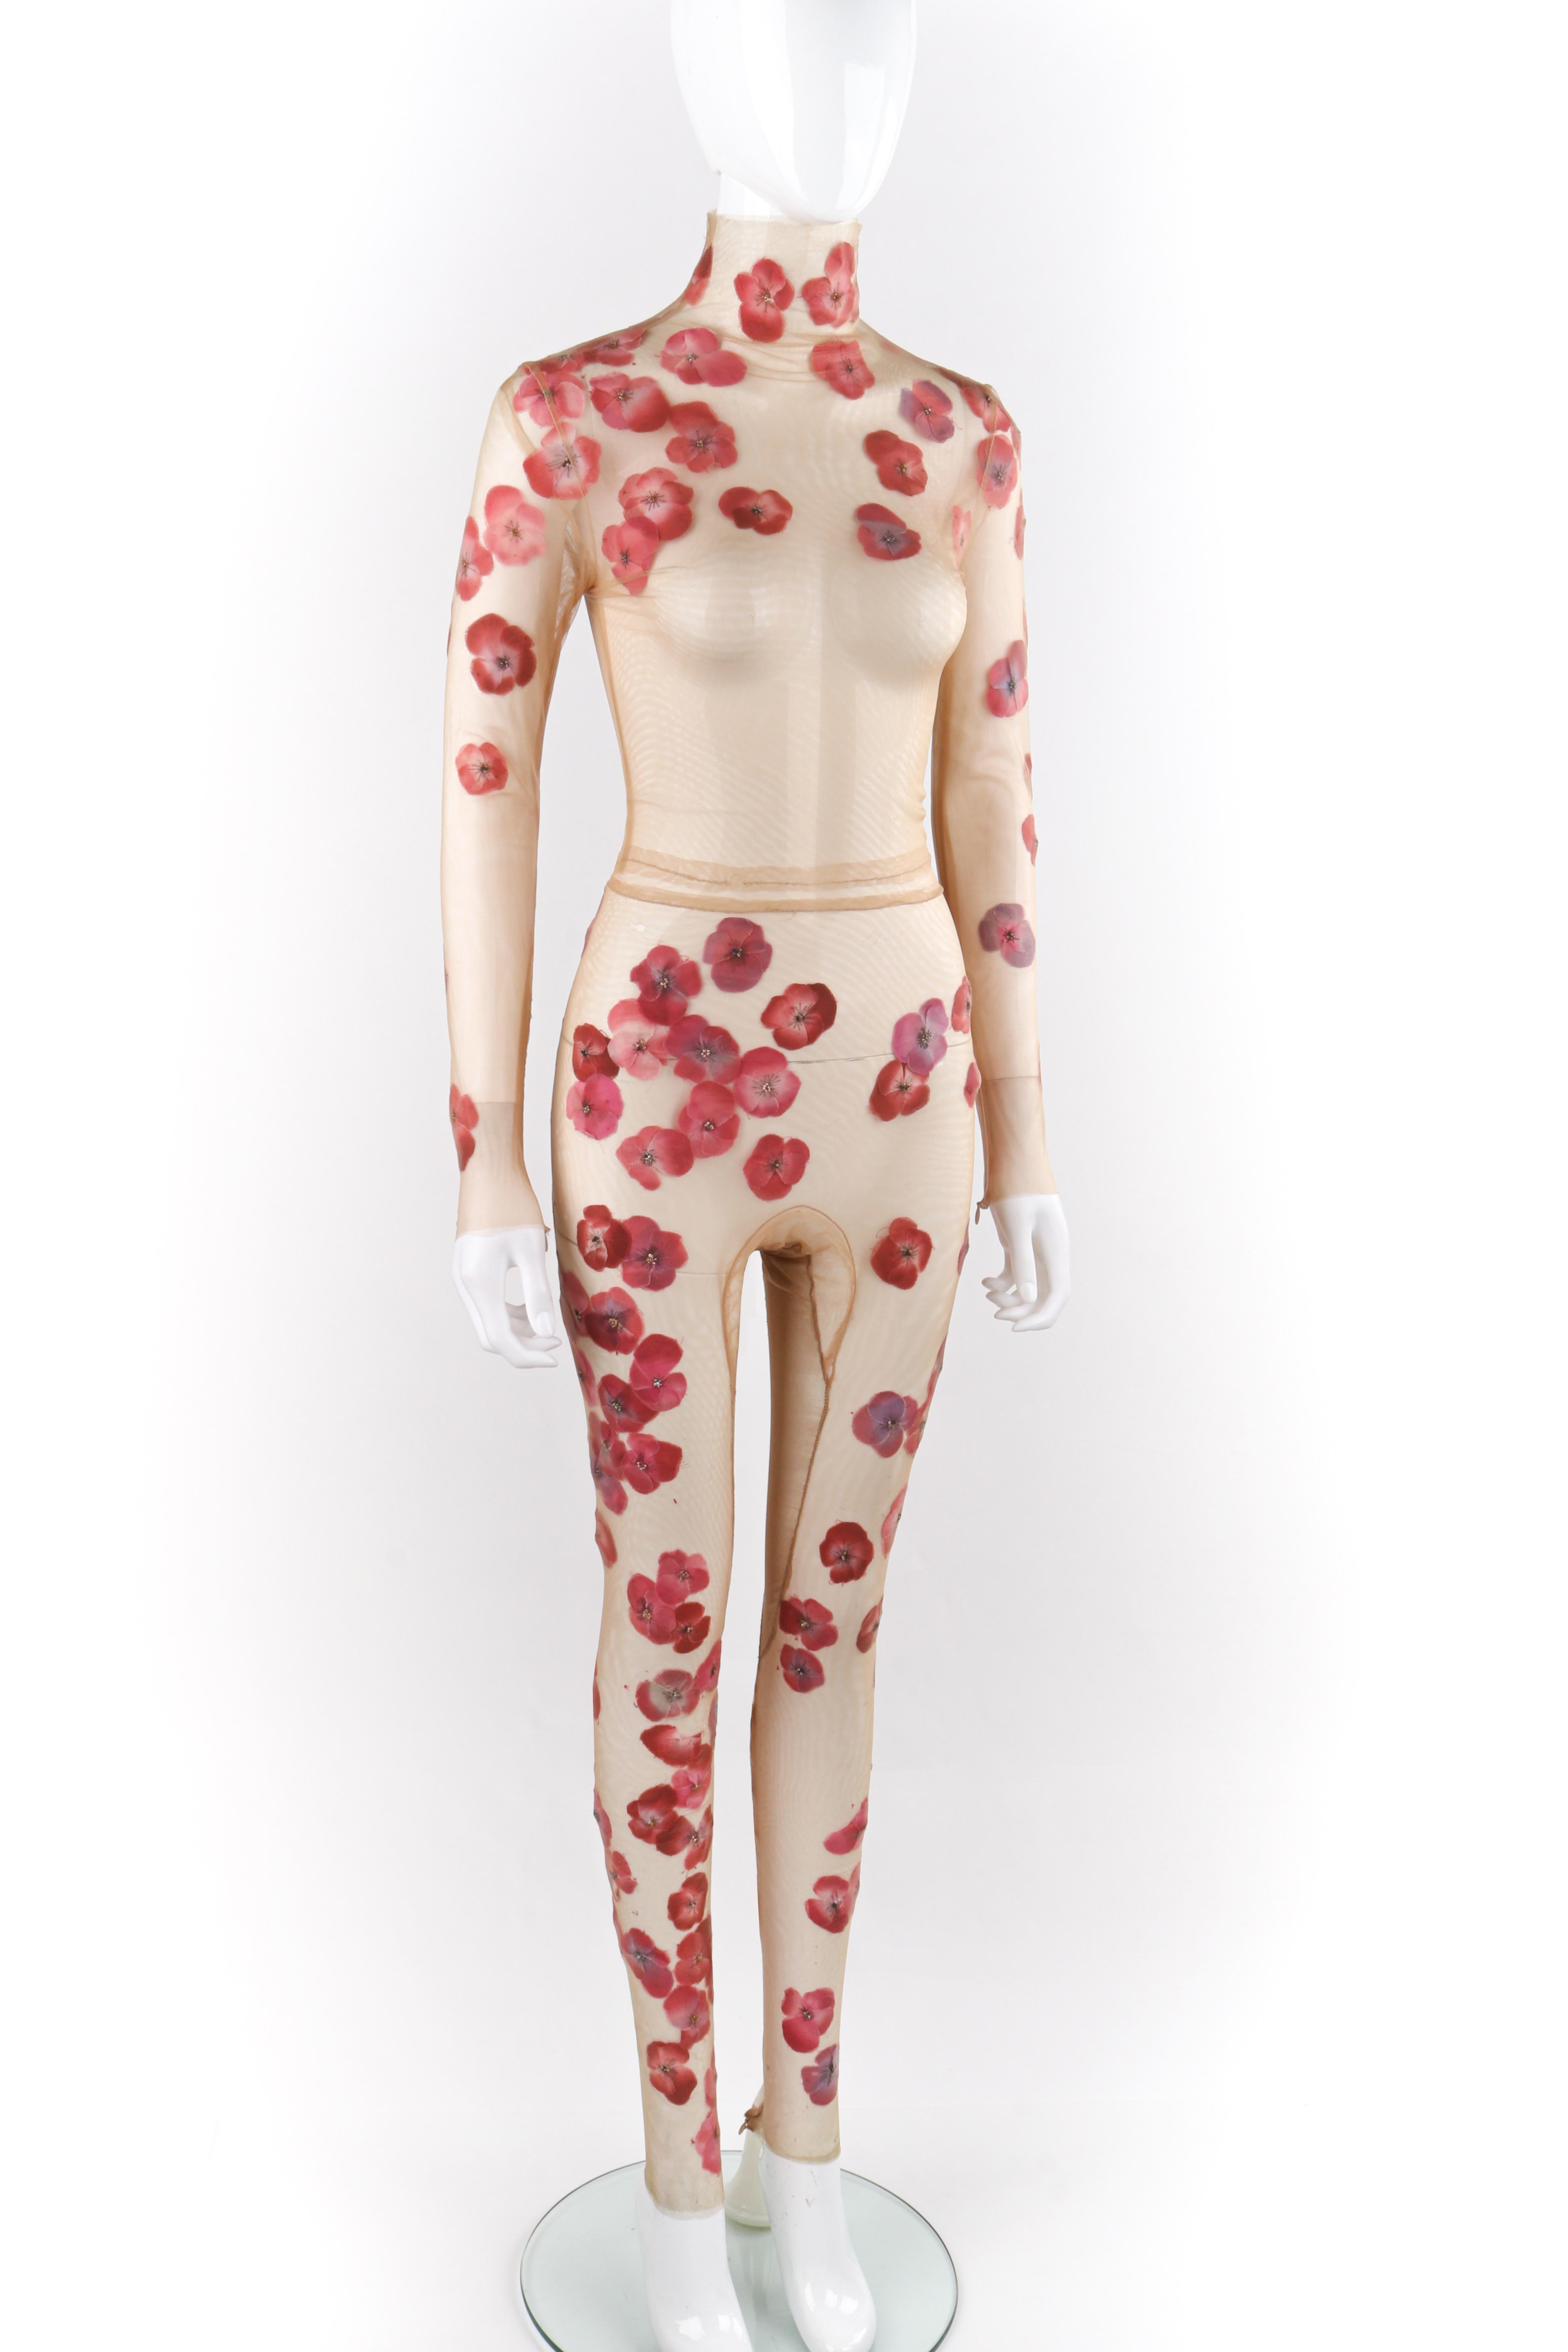 ALEXANDER McQUEEN S/S 2009 “Natural Dis-tinction Un-Natural Selection” Pink Red Floral Sheer Nude Mesh Bodysuit
 
Brand / Manufacturer: Alexander McQueen
Collection: S/S 2009 “Natural Dis-tinction Un-Natural Selection